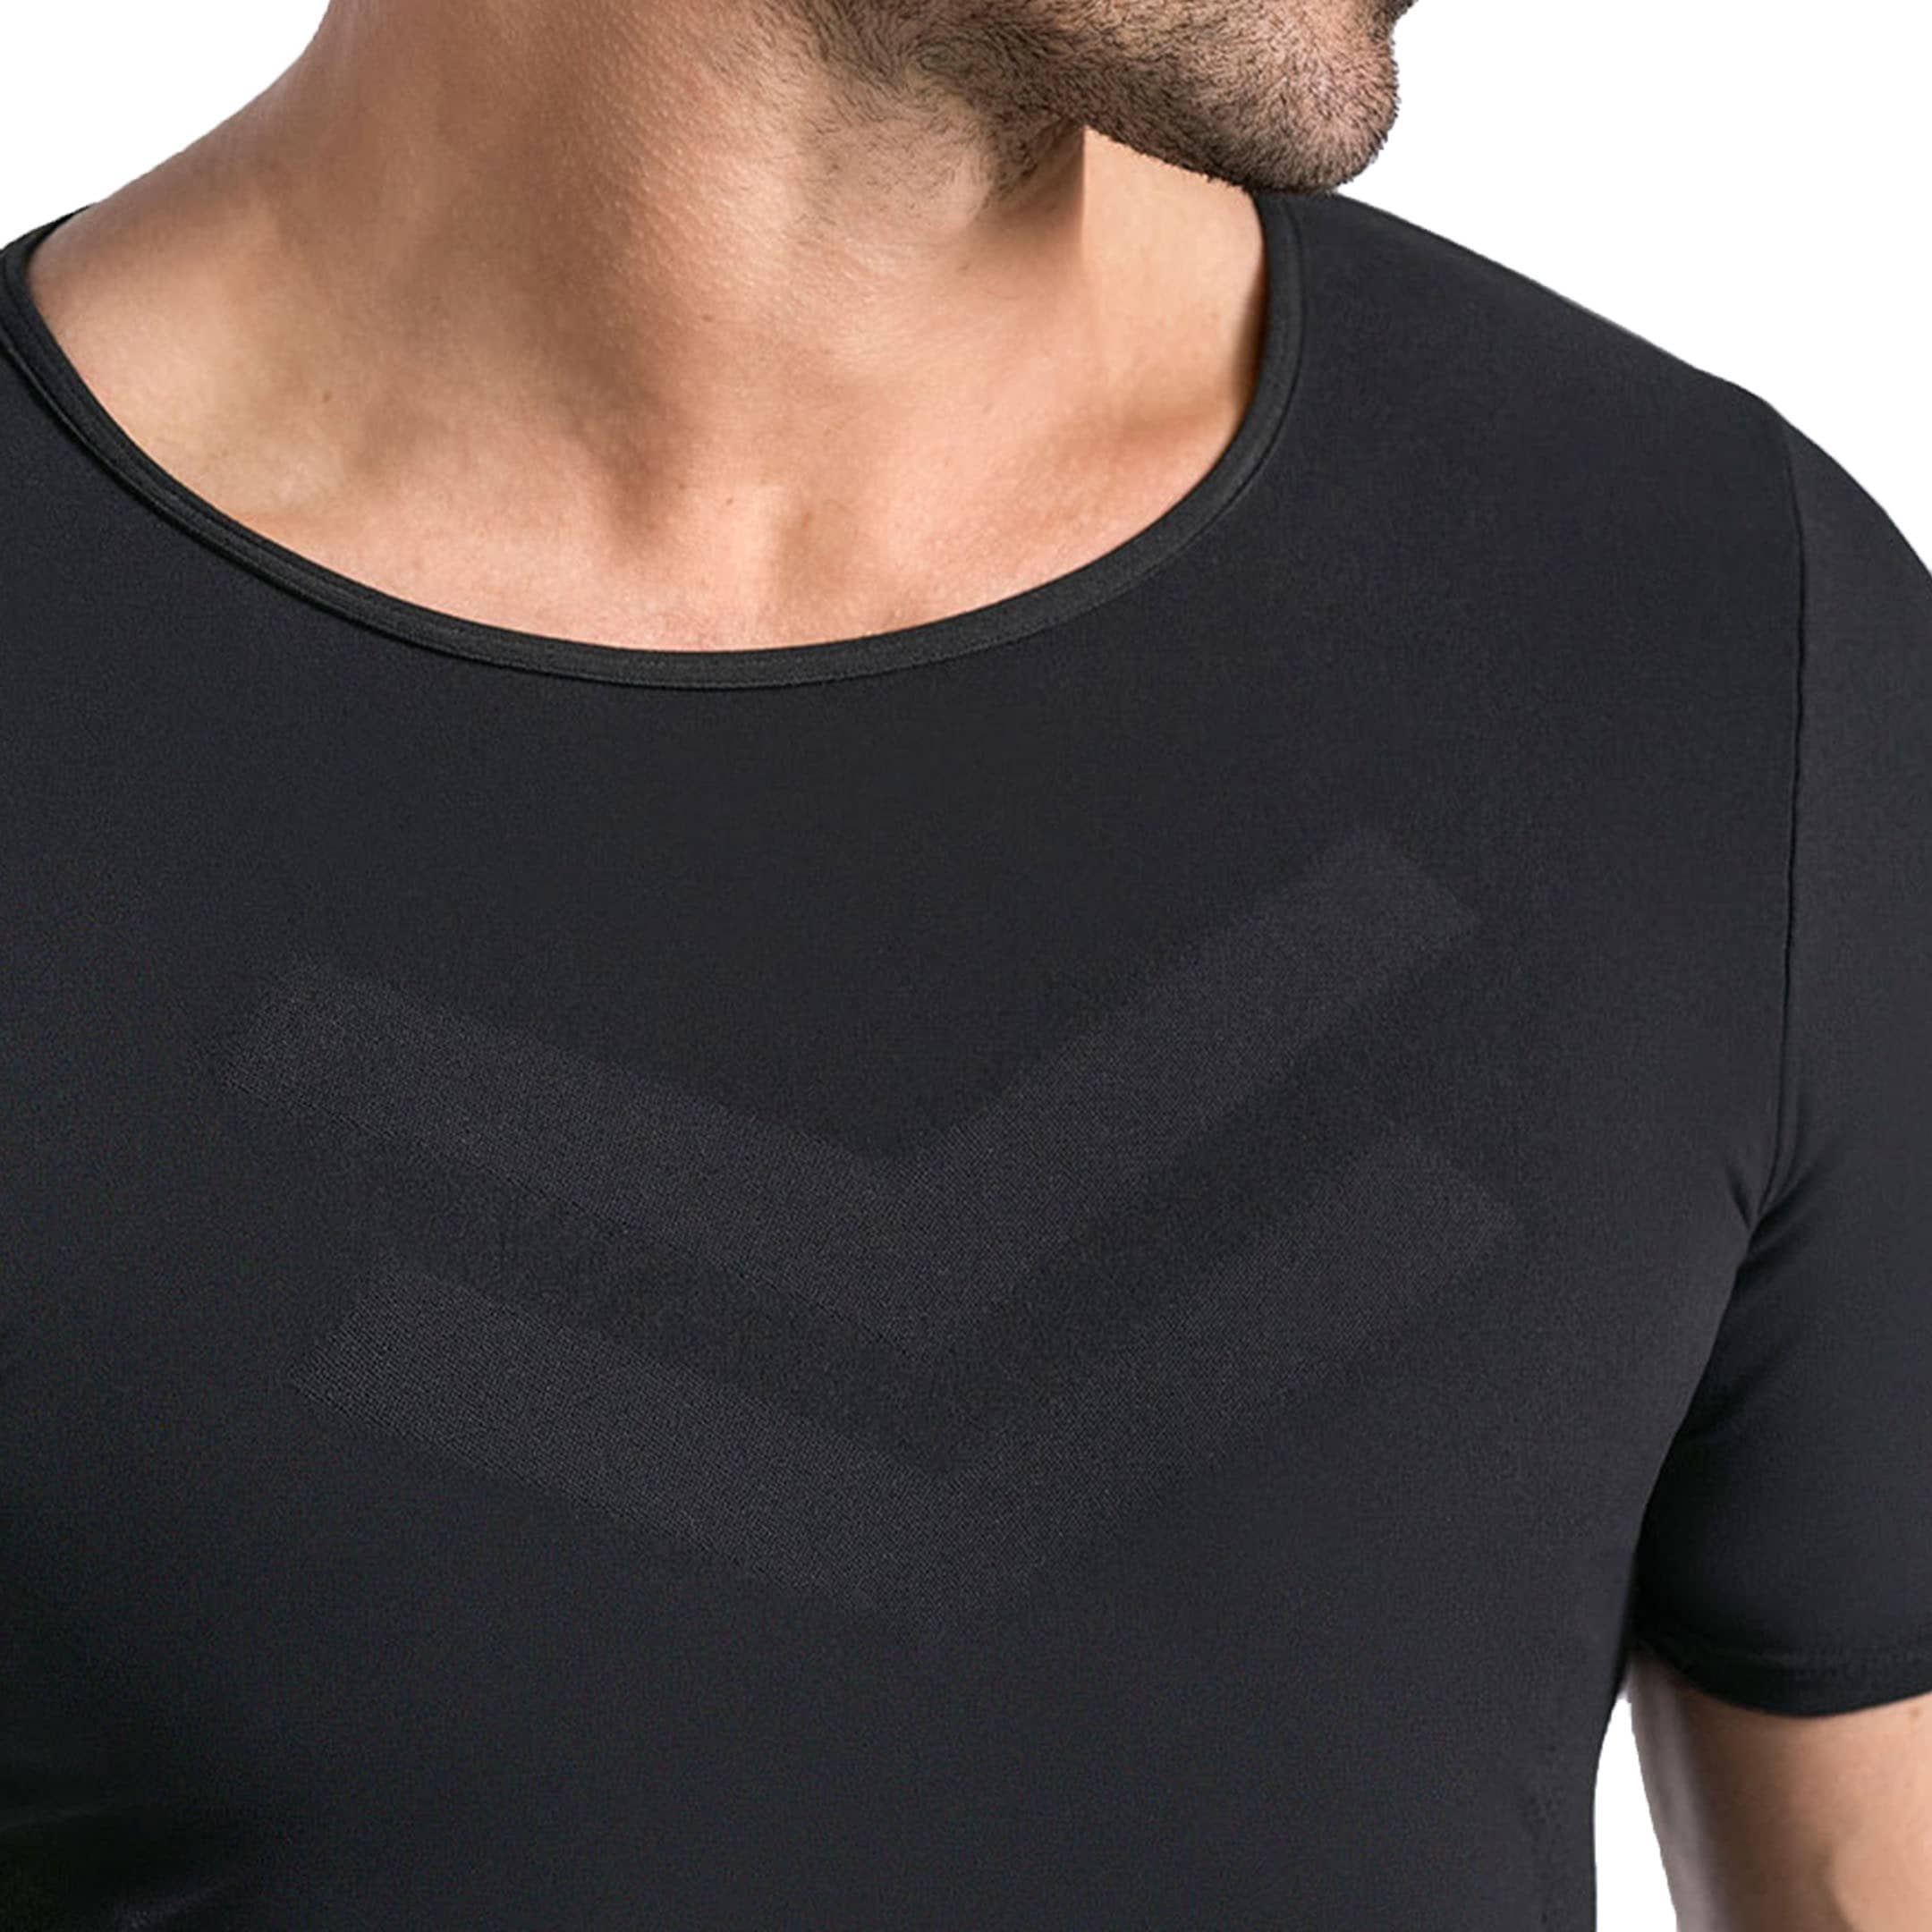 spise deltage person LEO Microfiber Slimming Compression T-Shirt - Black | INDERWEAR